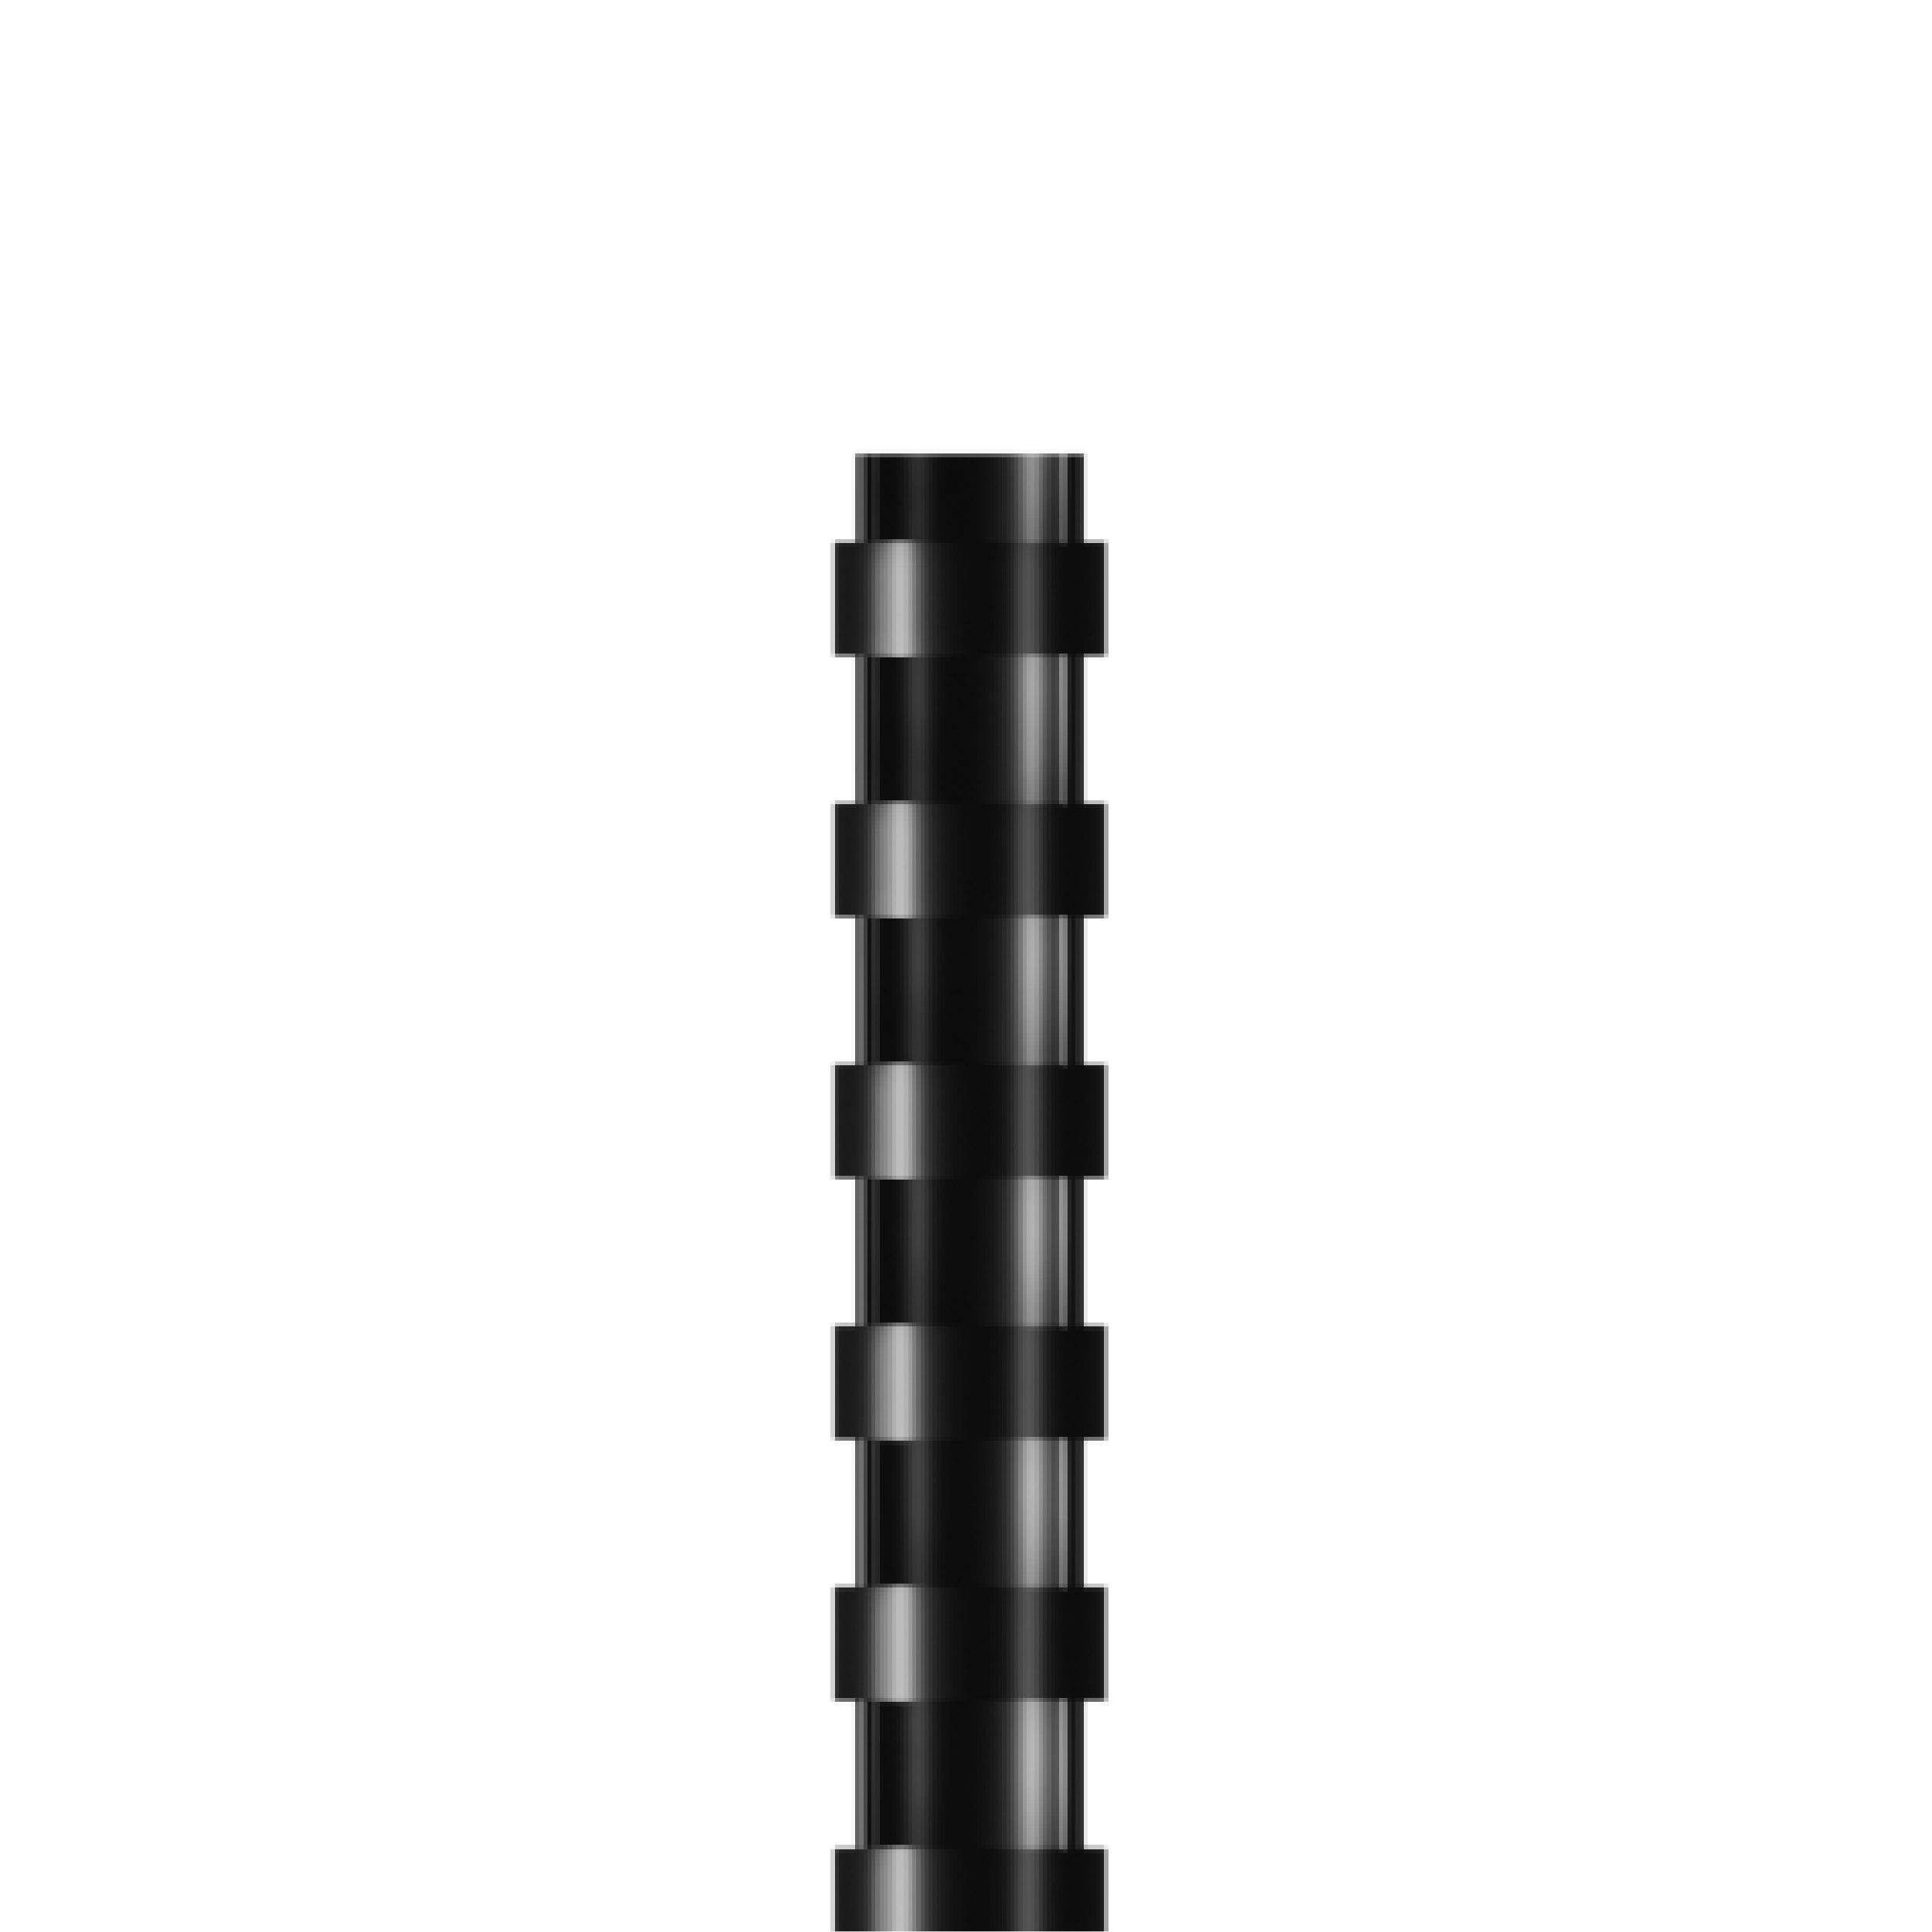 RAADO 14mm Plastic Spiral Binding Comb, Black